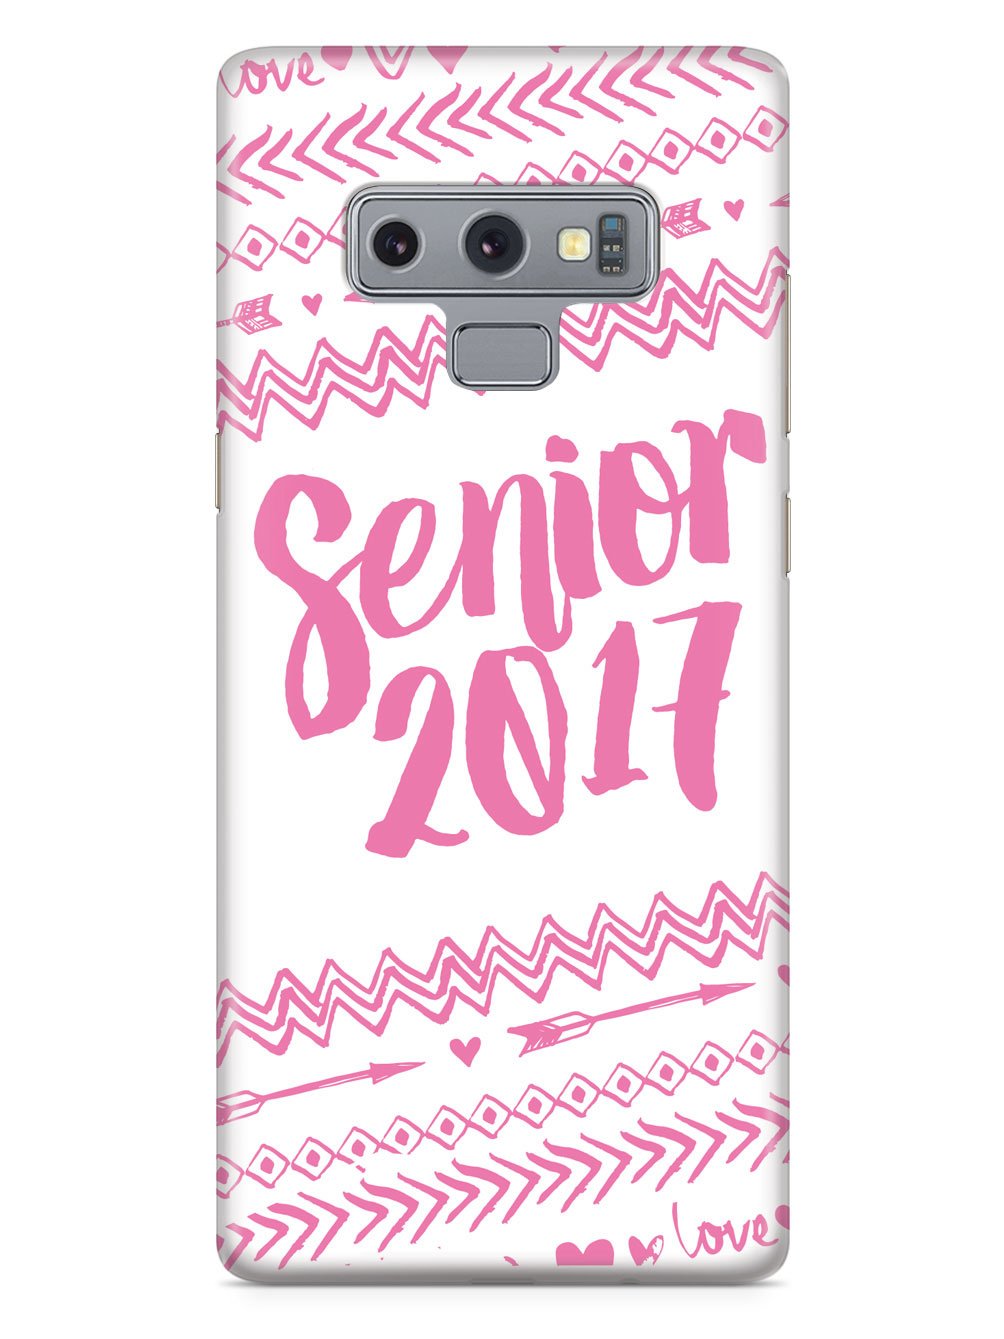 Senior 2017 - Pink Case - pipercleo.com